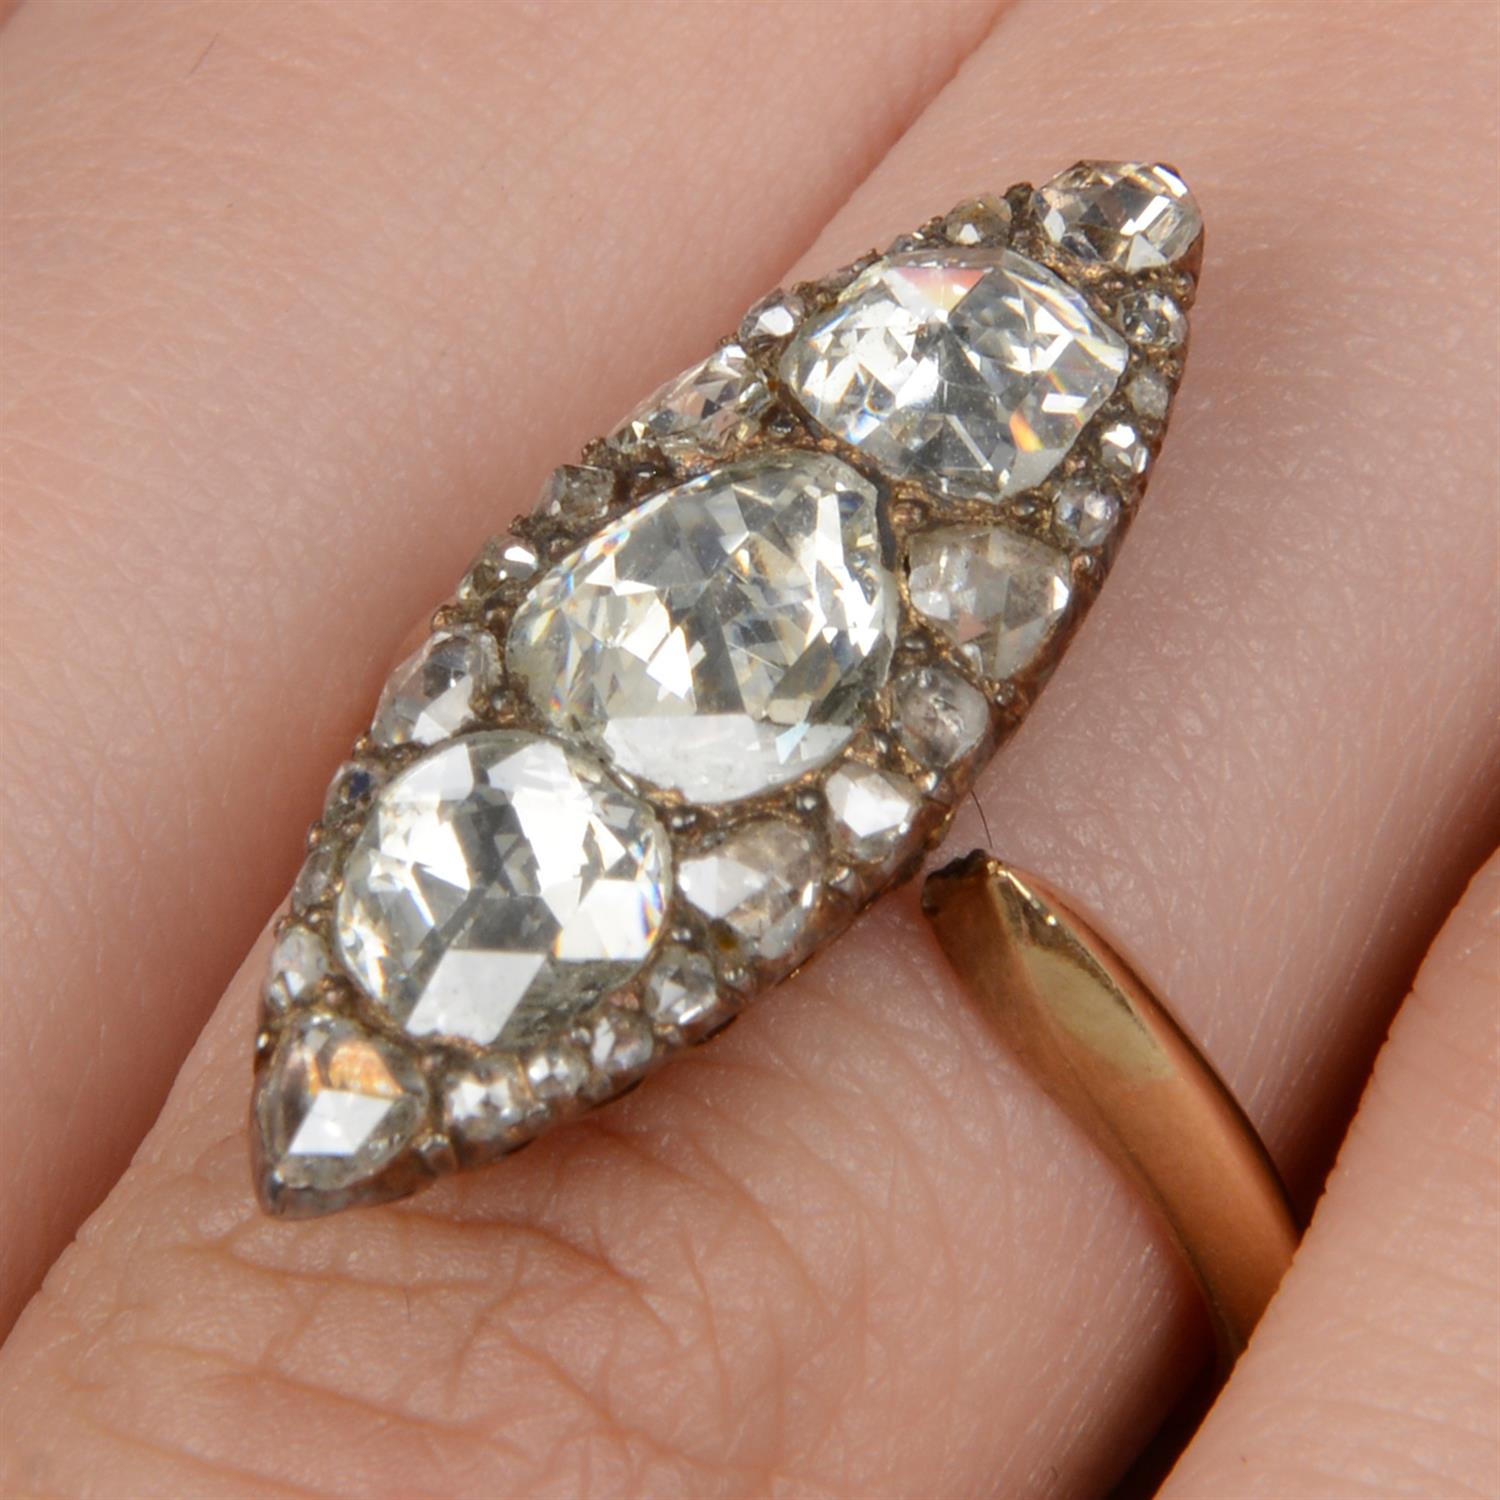 Rose-cut diamond ring